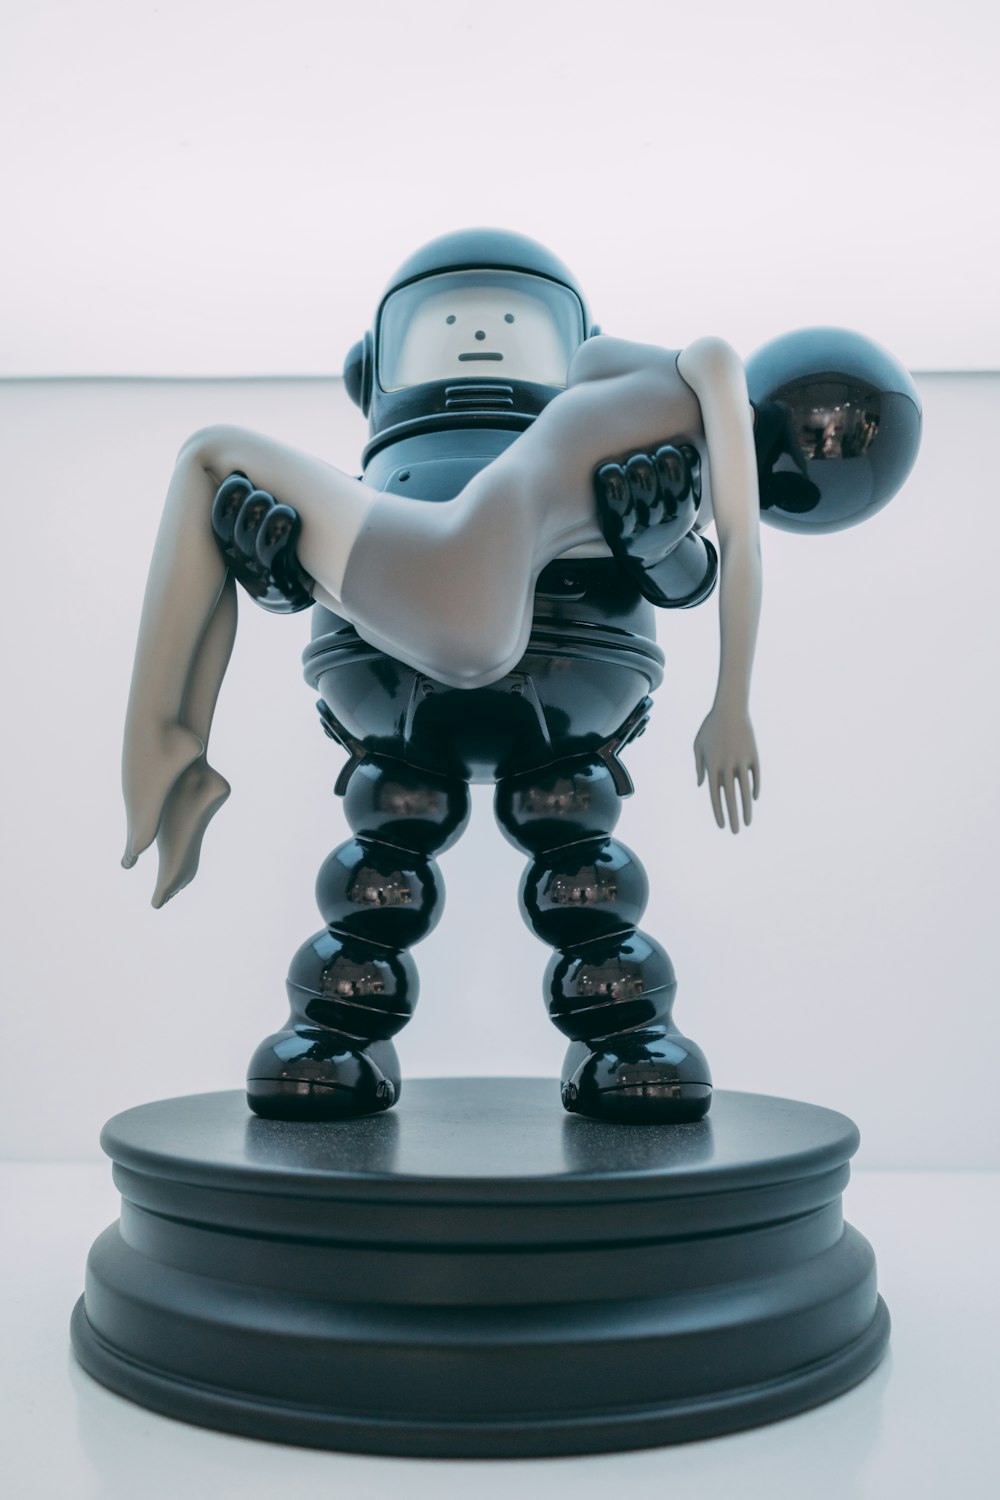 black and white robot figurine